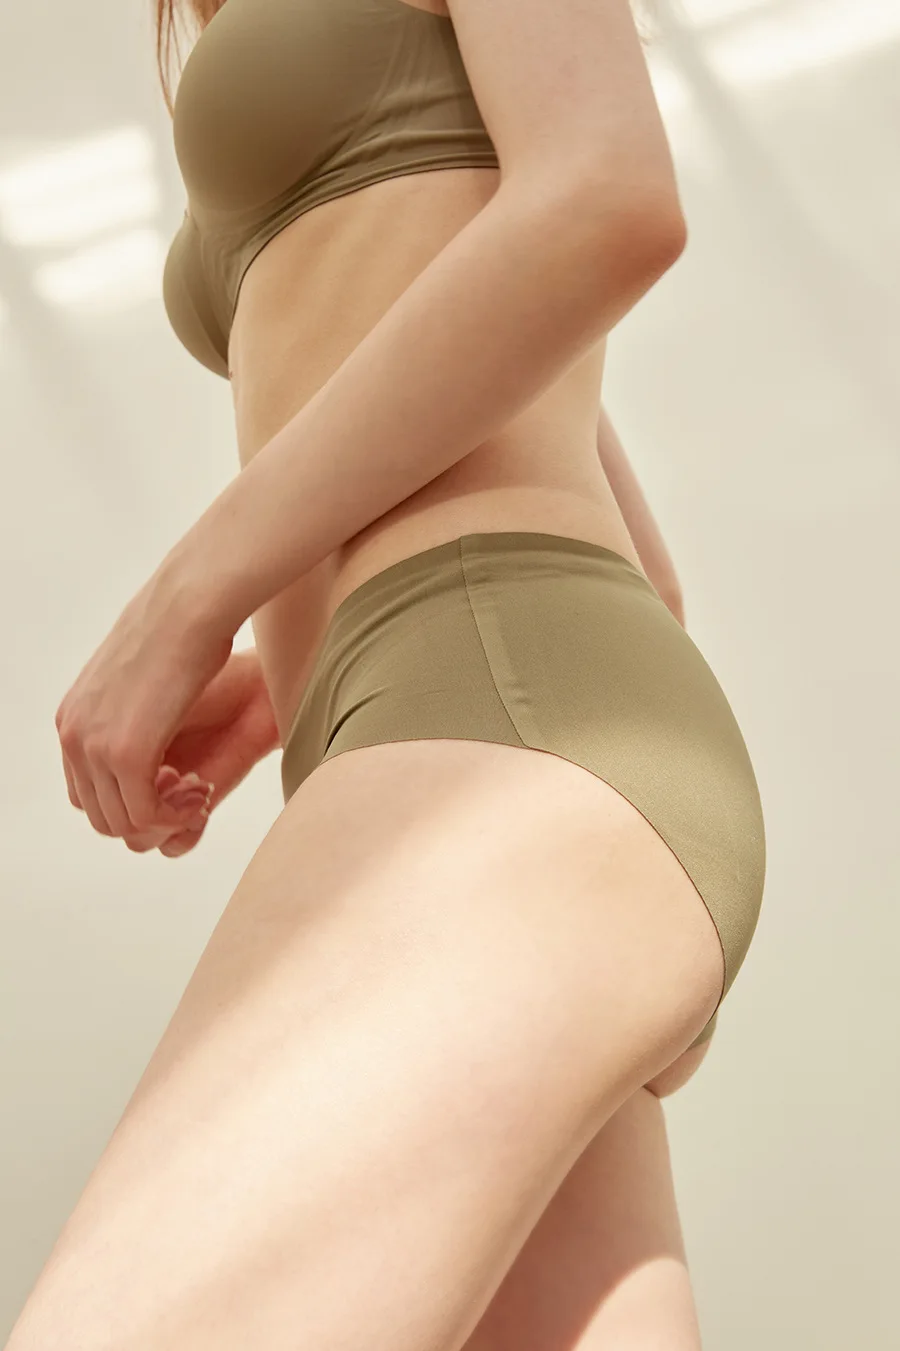 Women bra & brief sets Seamless Padded Bra Sporty Sets Female Soft Breathable Naked Underwear Sets